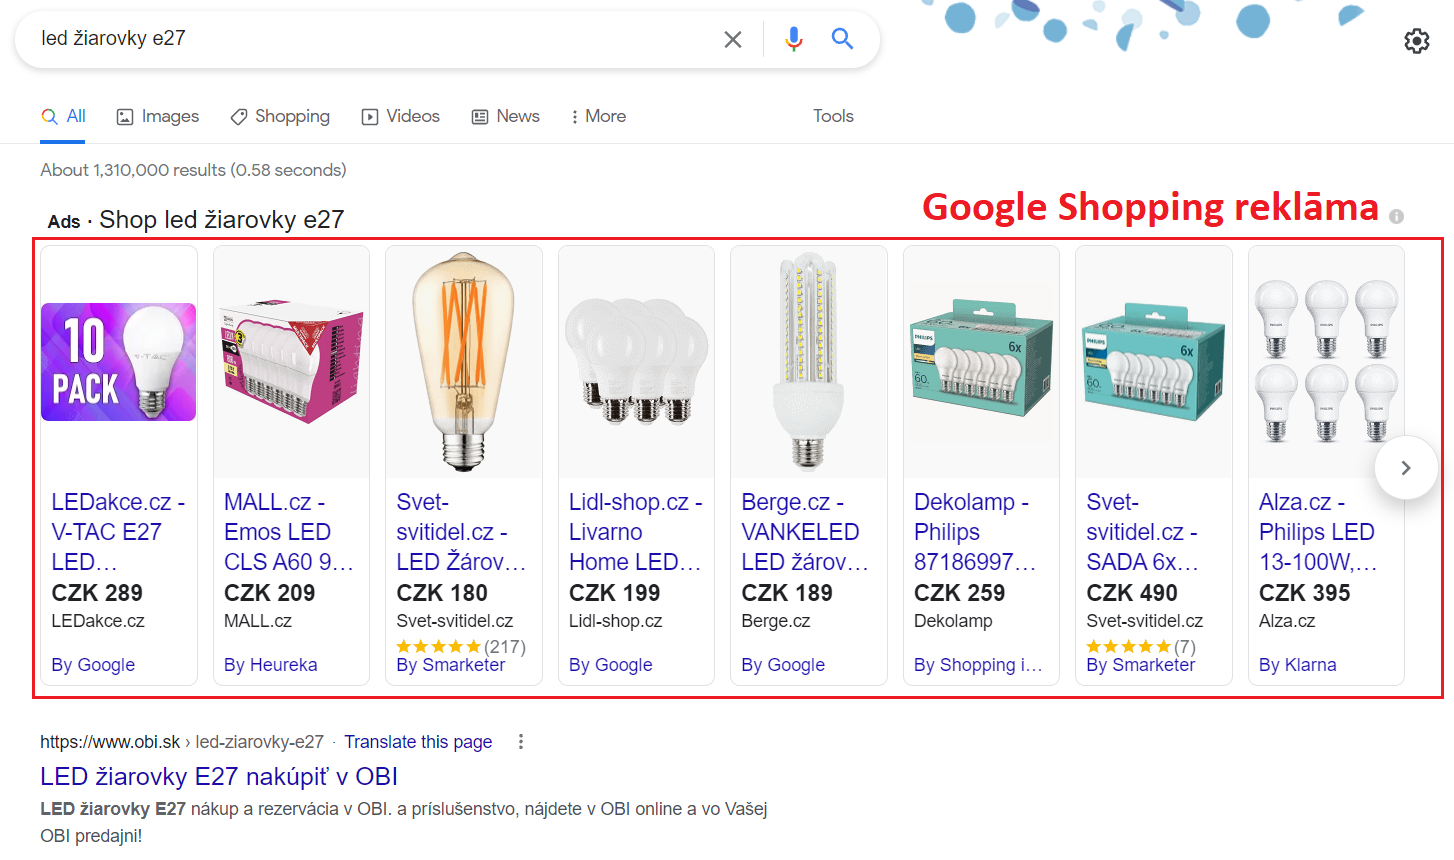 Google Shopping kampanas Google reklāma 2021